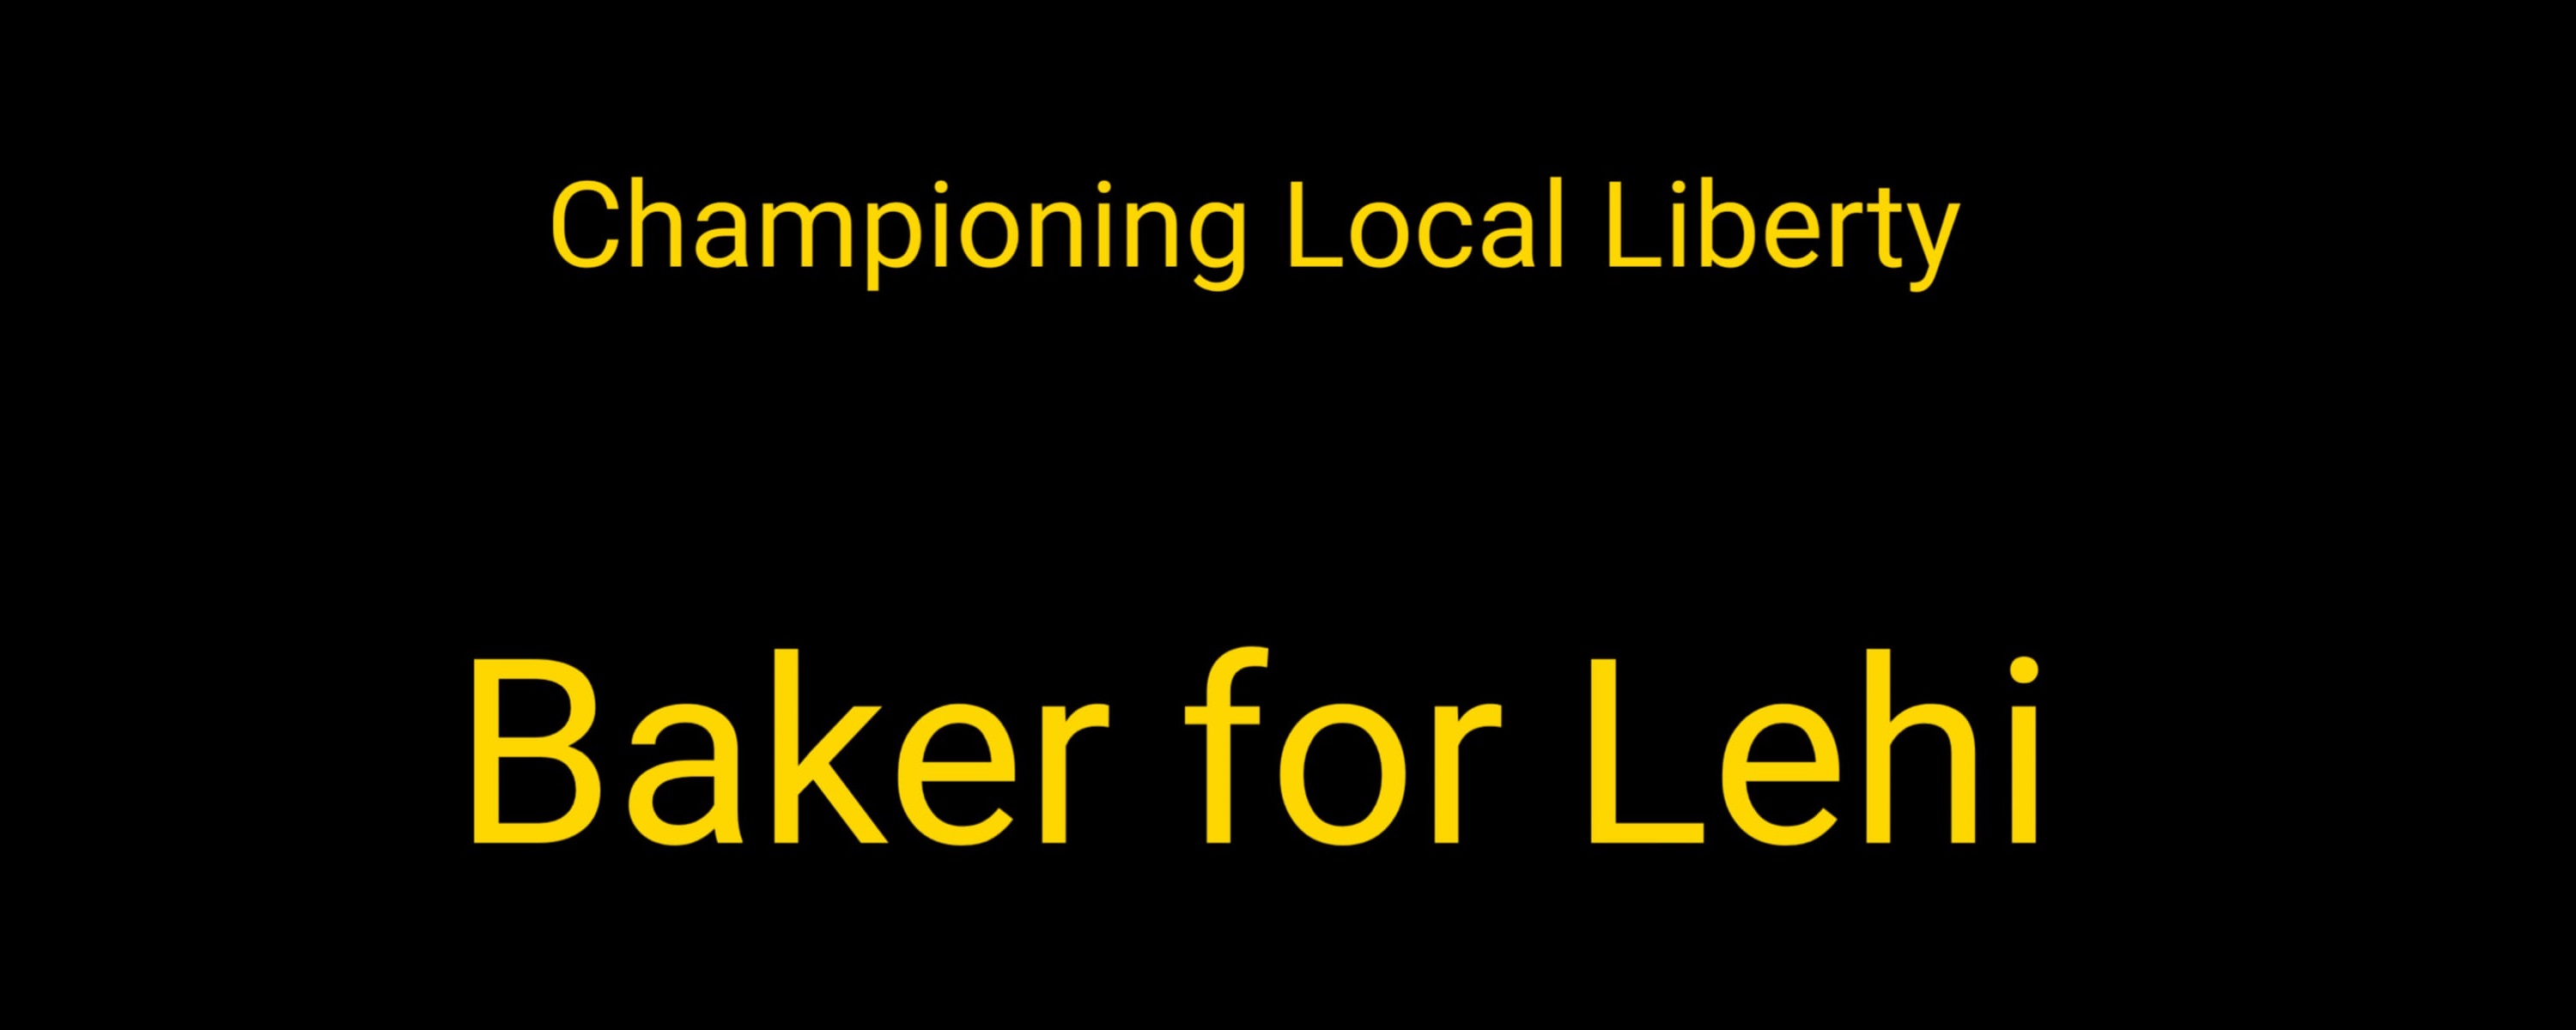 Baker For Lehi - Championing Local Liberty